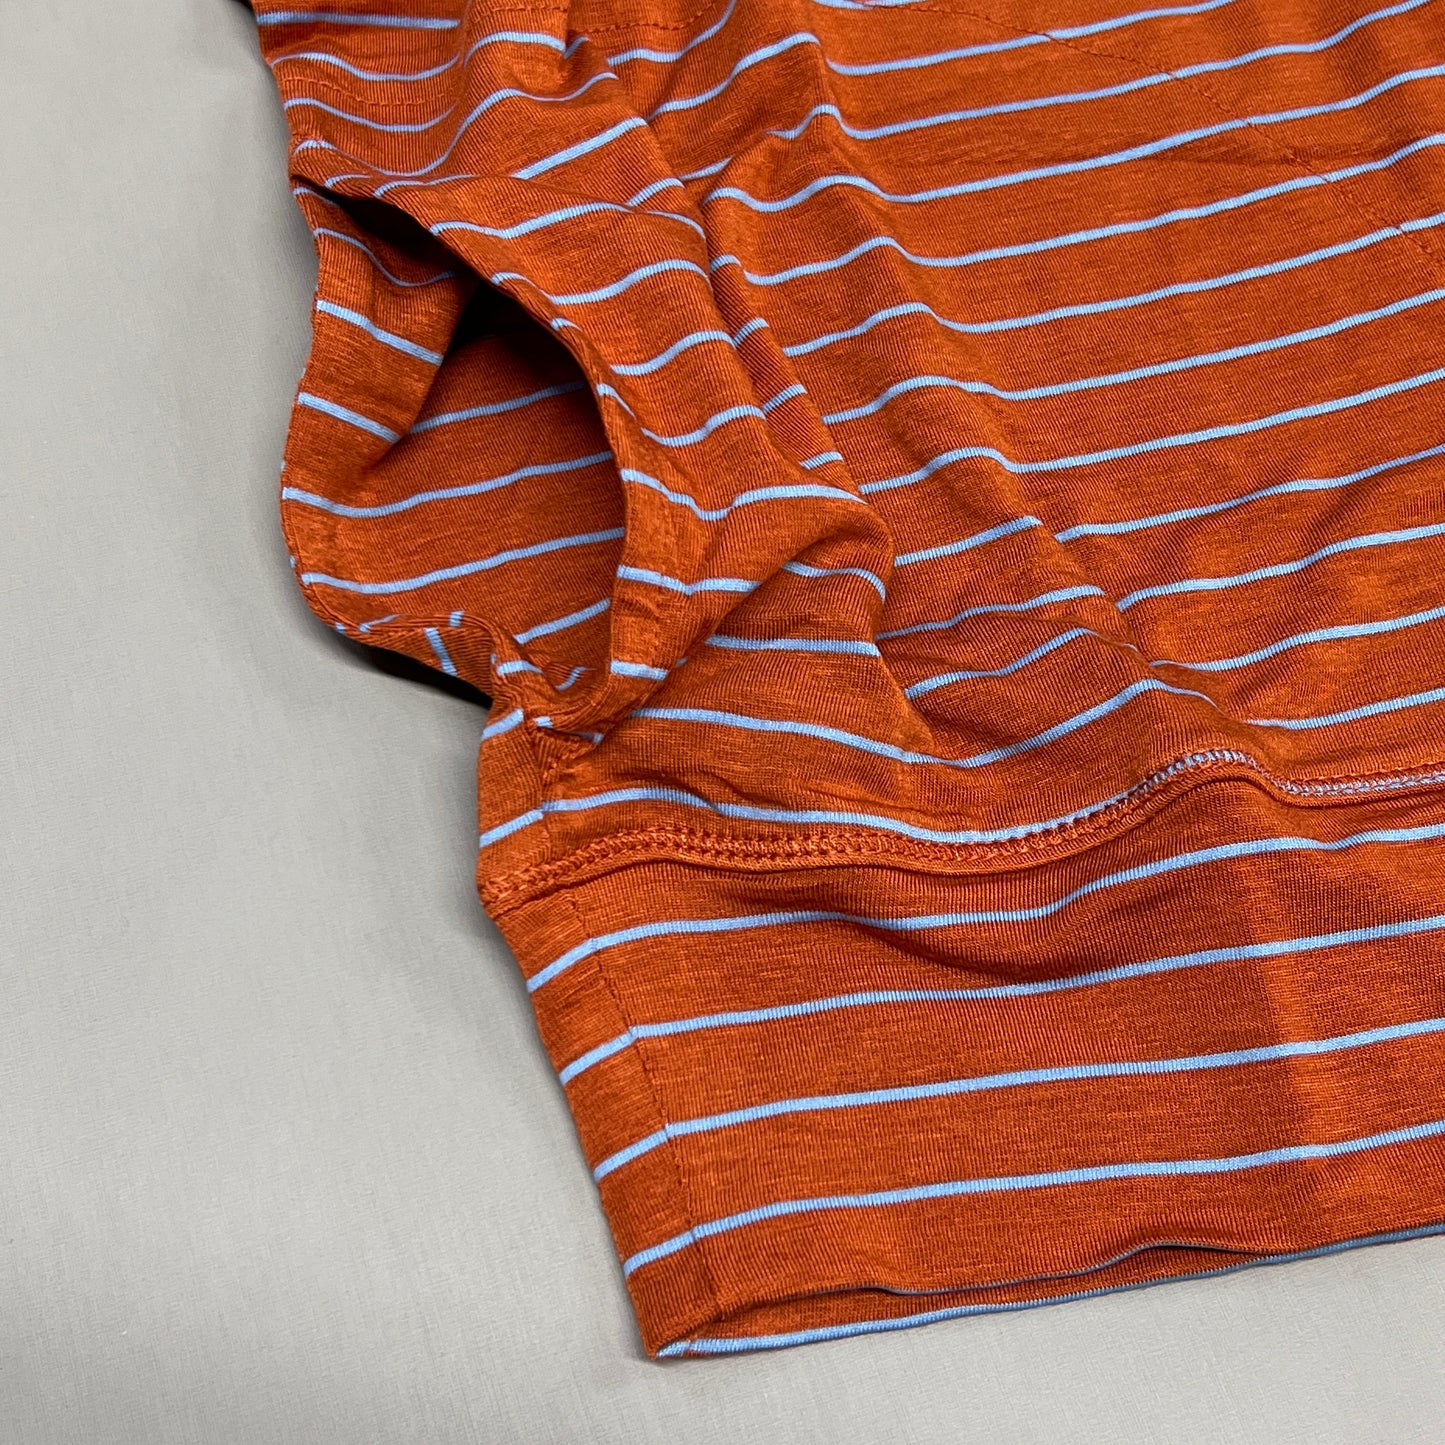 PRANA Sol Protect Turtleneck Women's Shirt Sz M Gingerbread Stripe 1962241 (New)